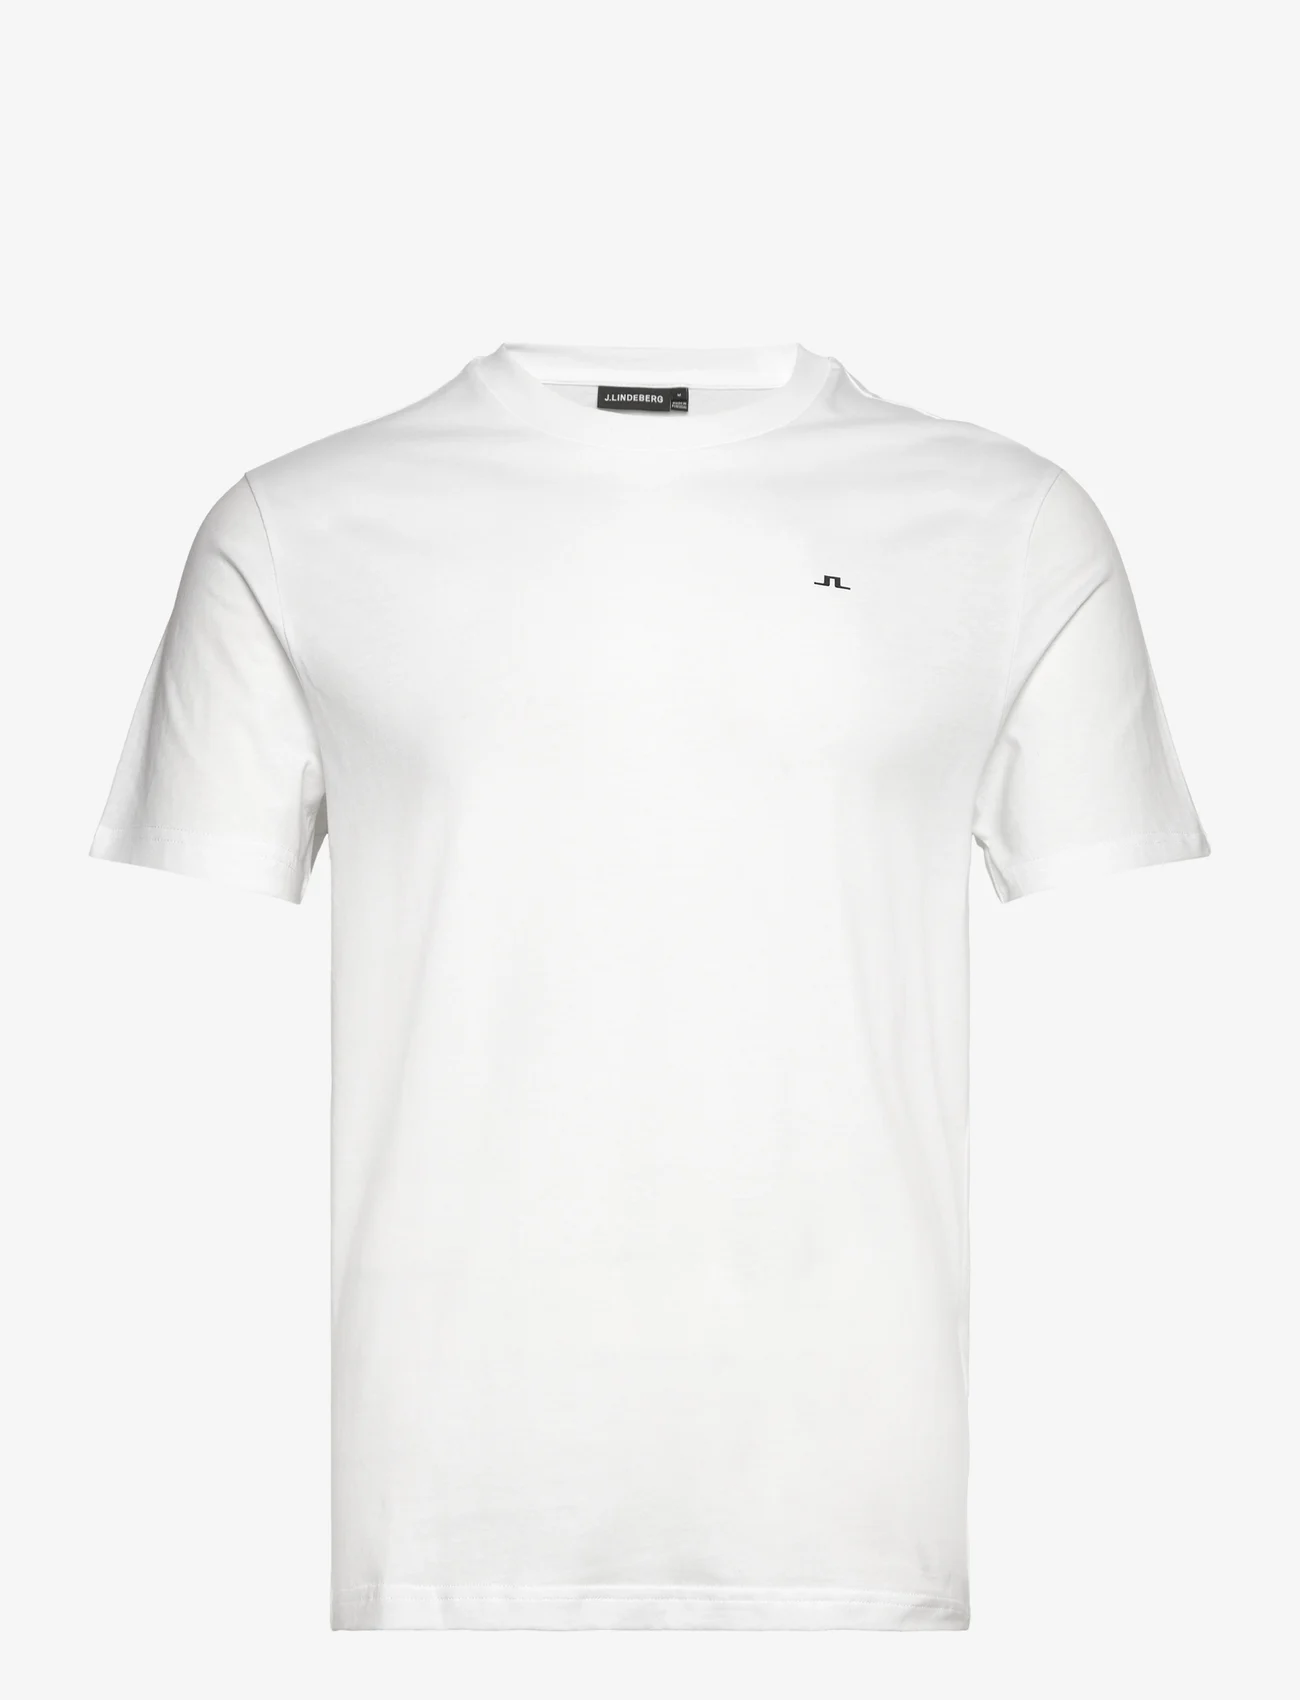 J. Lindeberg - M Cotton Blend T-shirt - kurzärmelige - white - 0